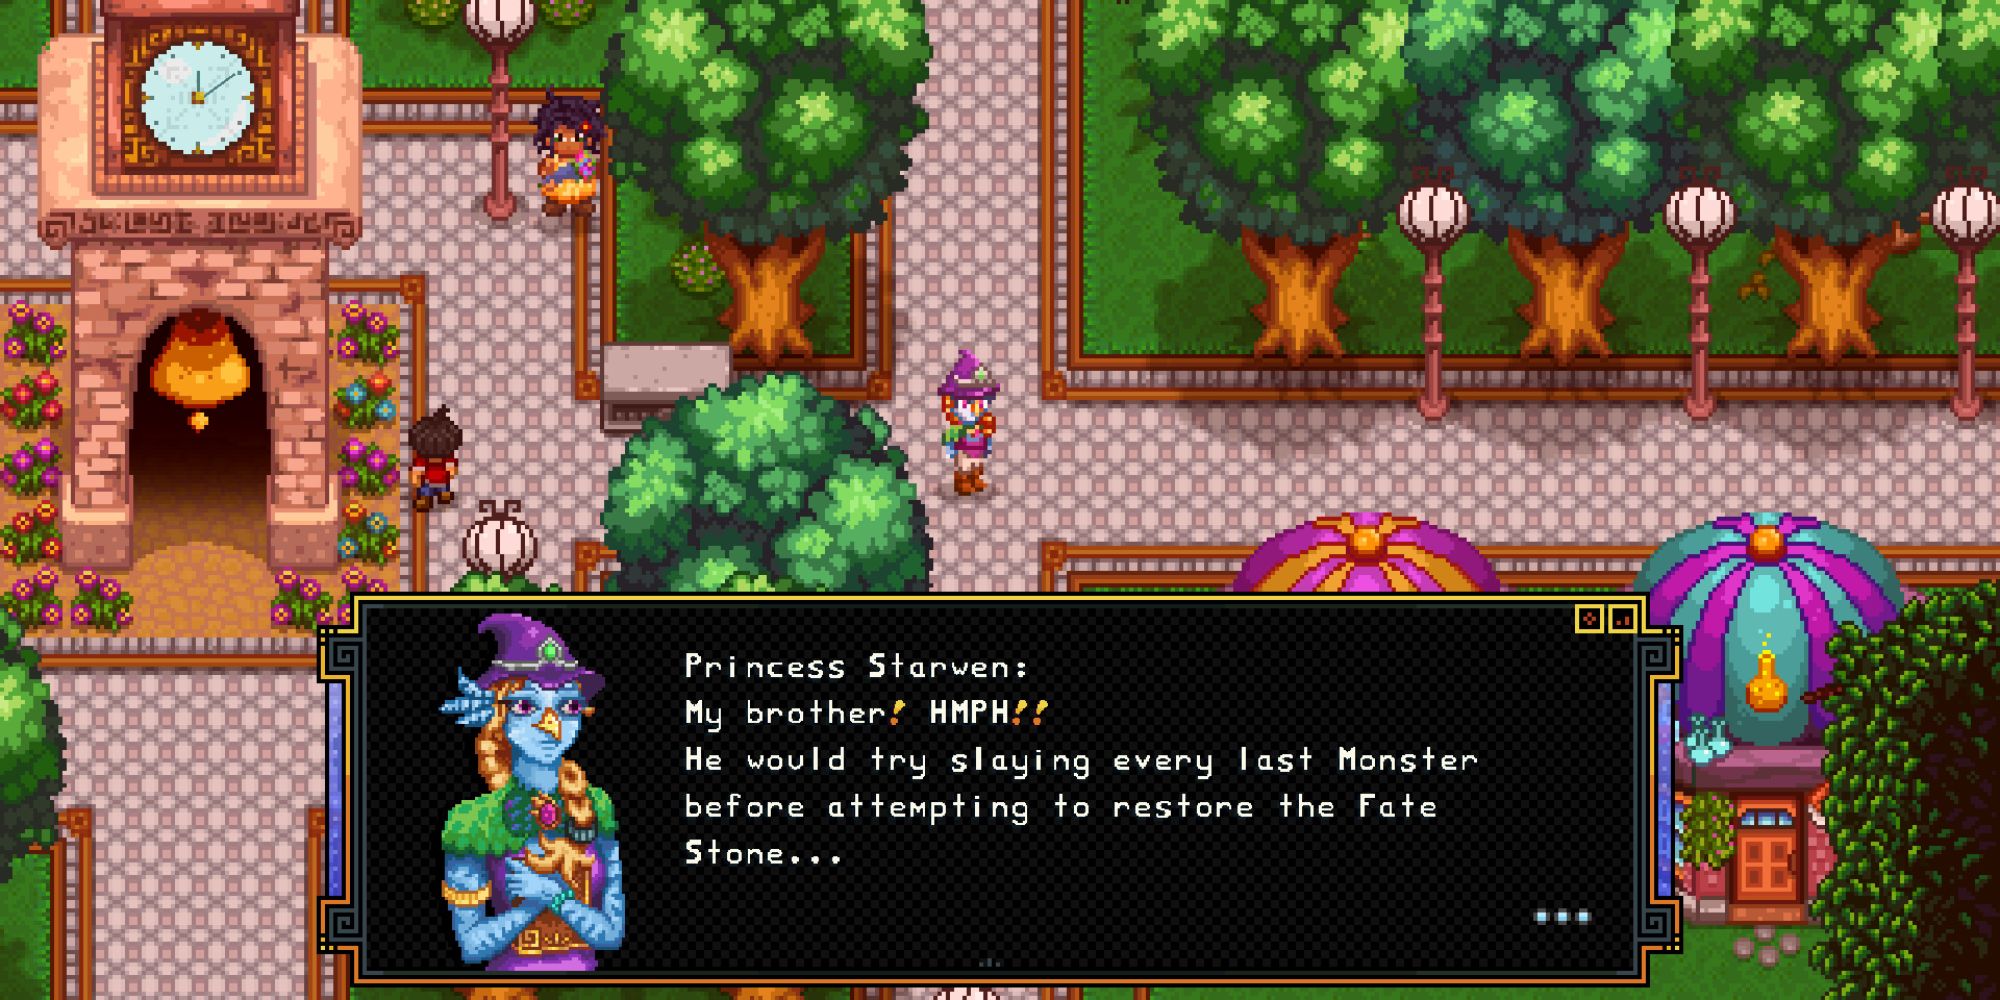 princess starwen dialogue in serin fate